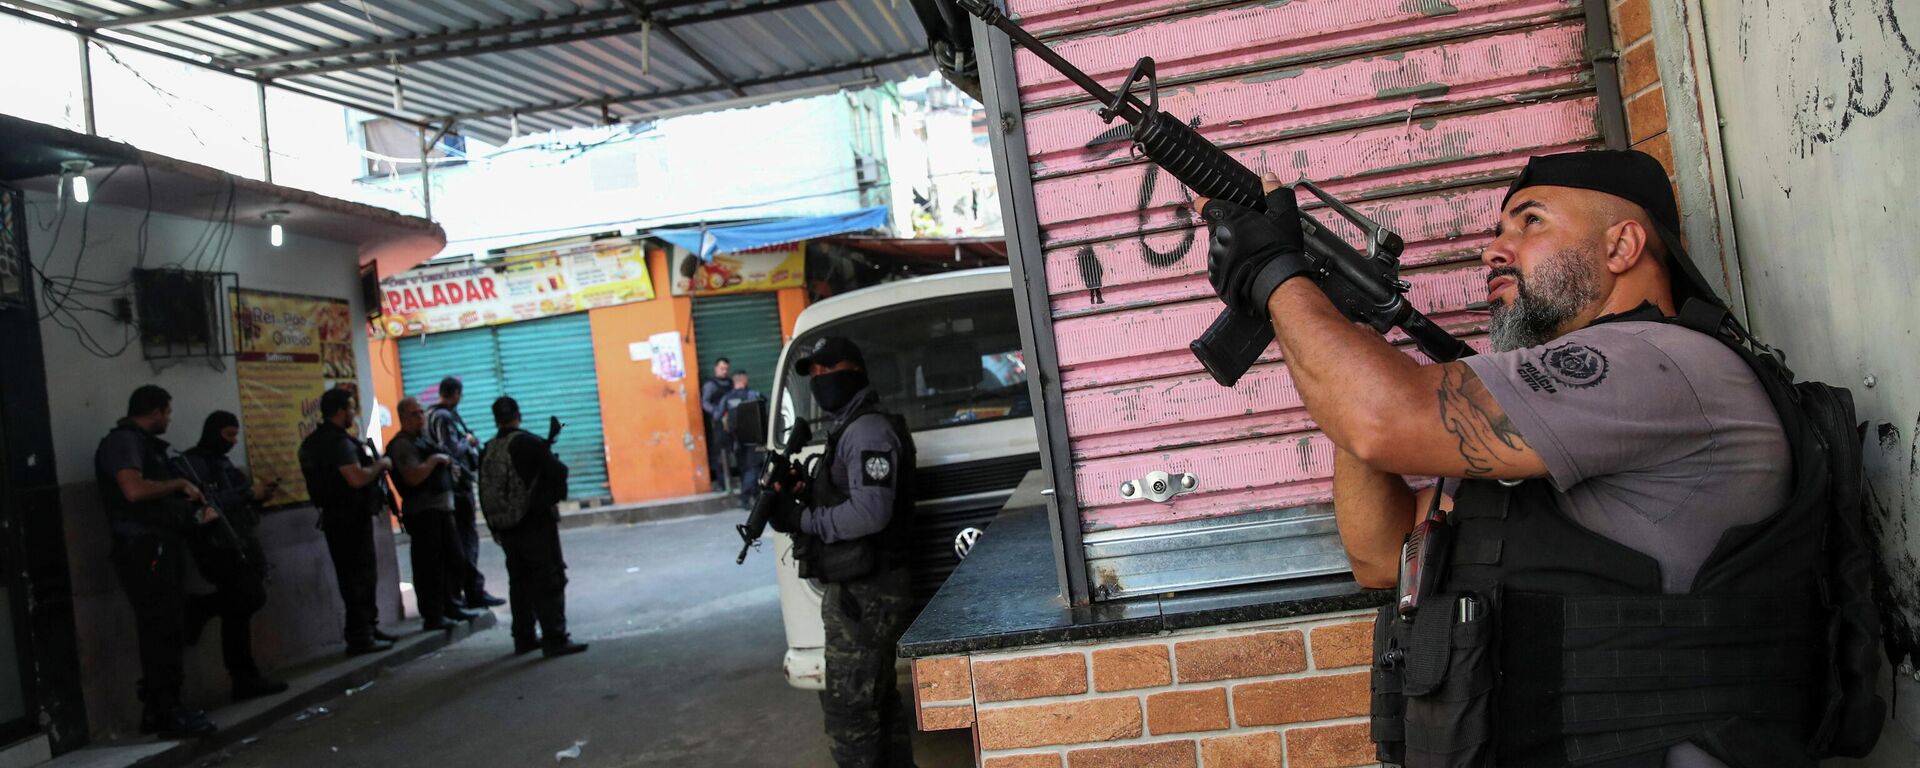 Policía de Río en favela - Sputnik Mundo, 1920, 06.05.2021